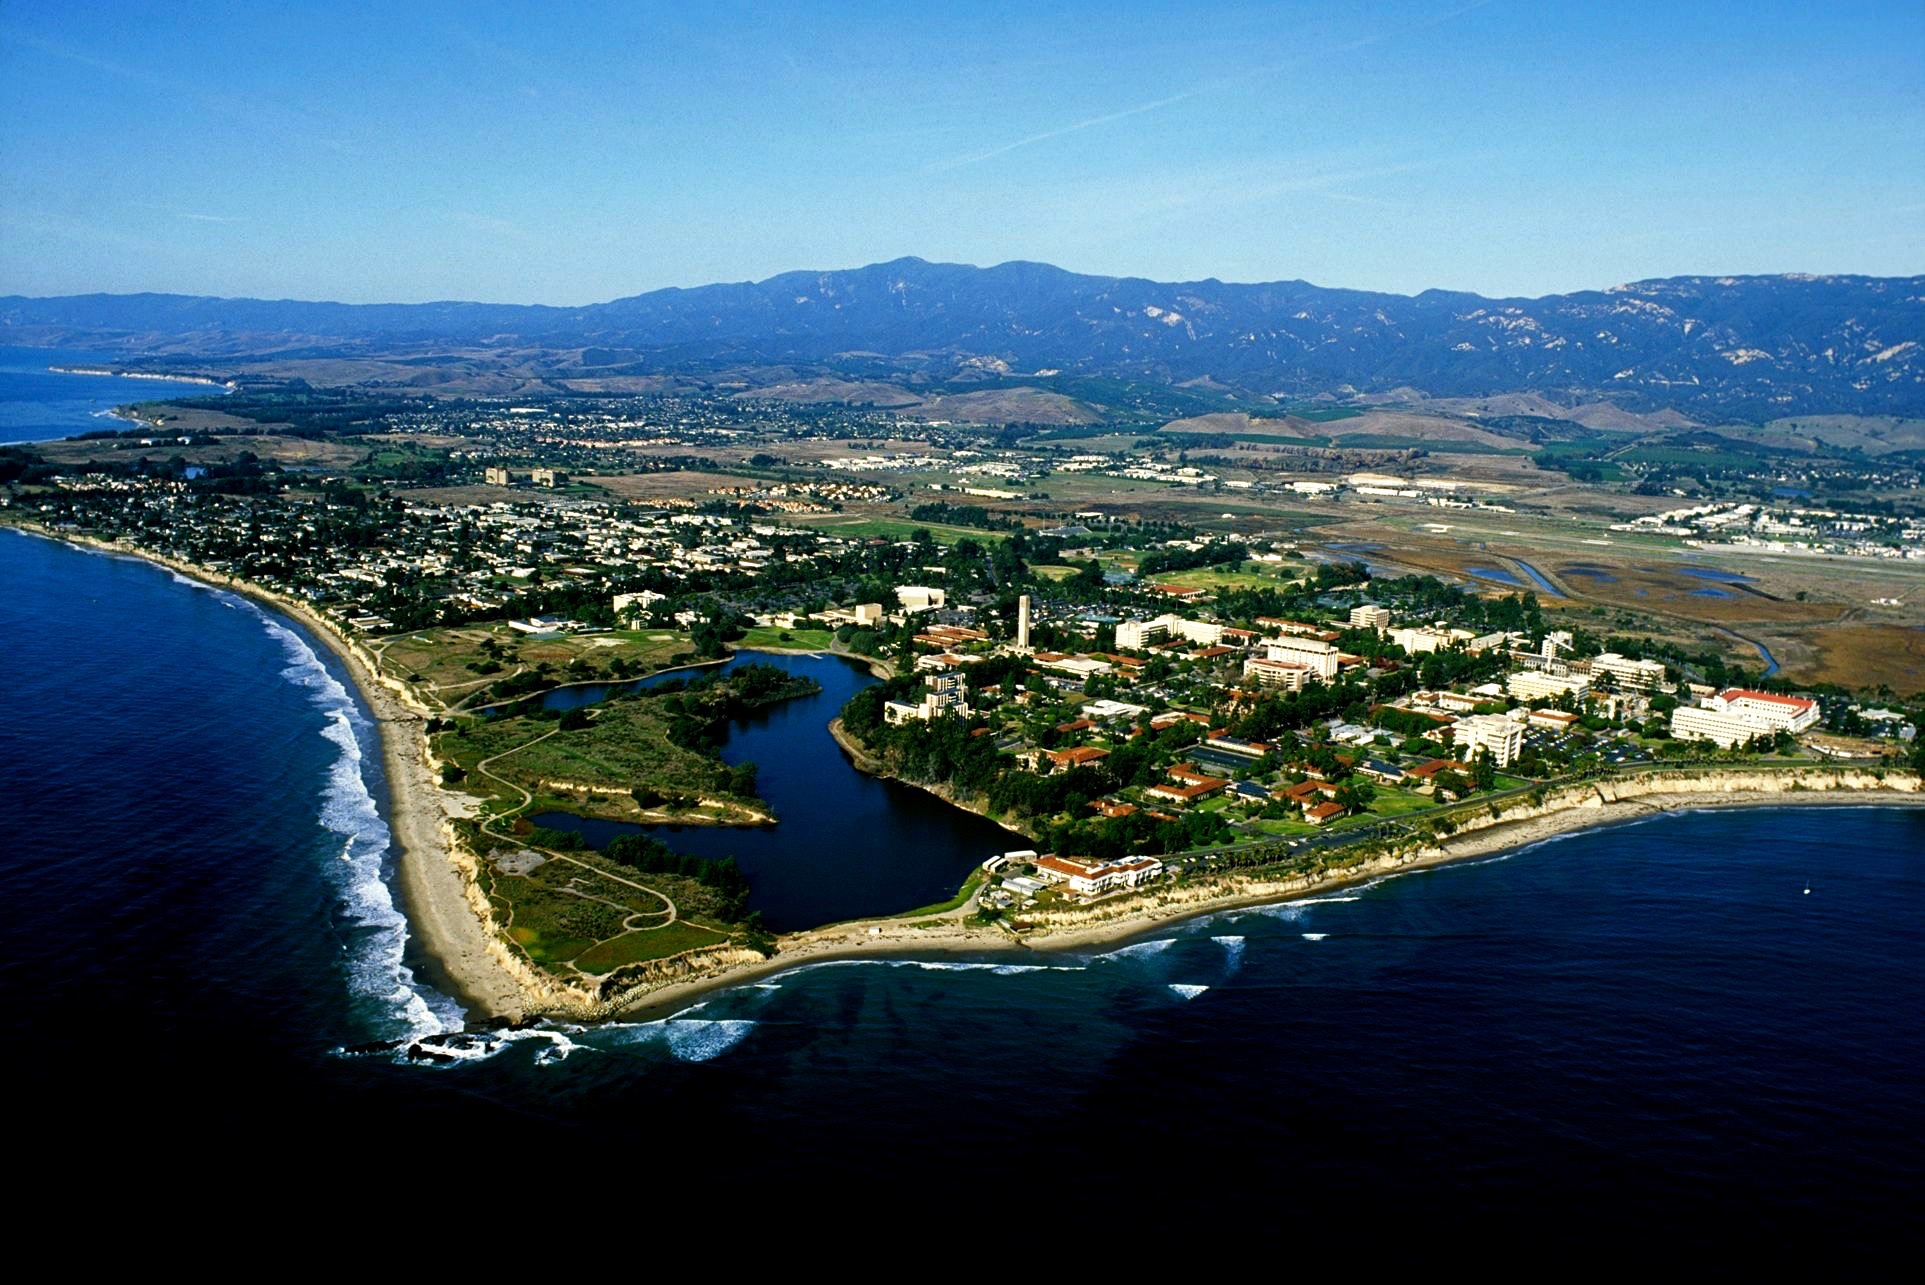 University of California – Santa Barbara